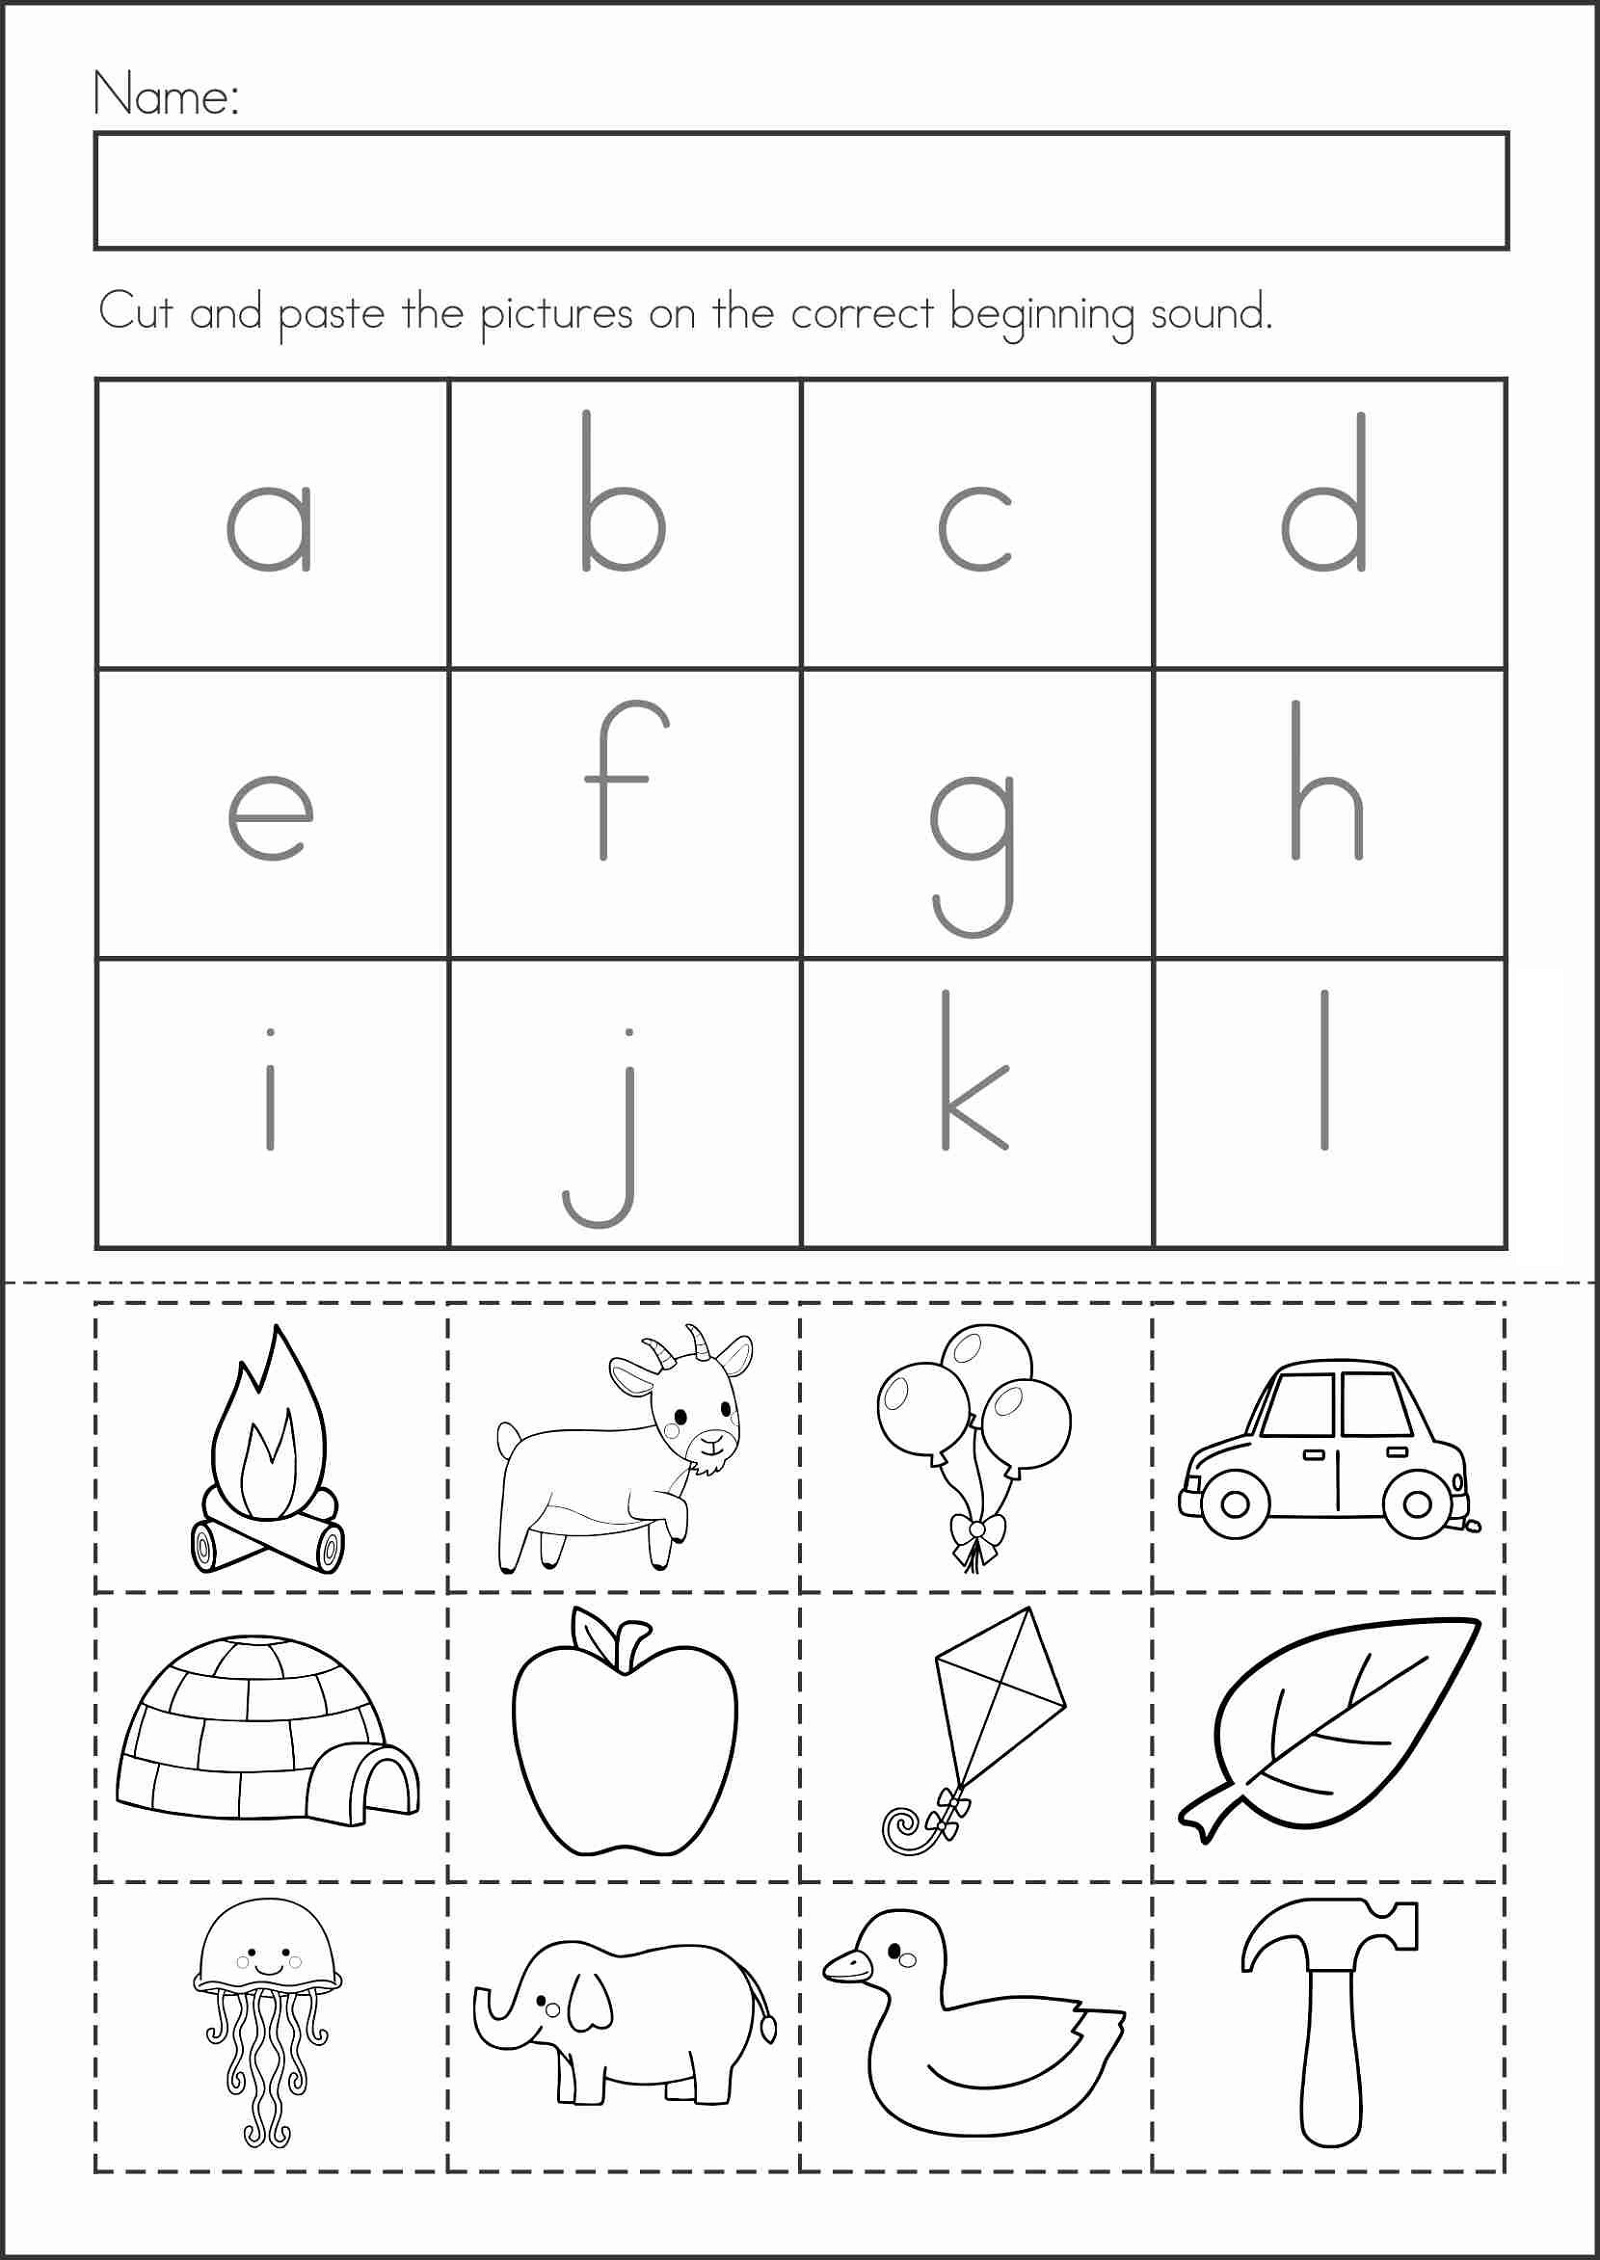 Free Printable Worksheets For Kindergarten Cut And Paste